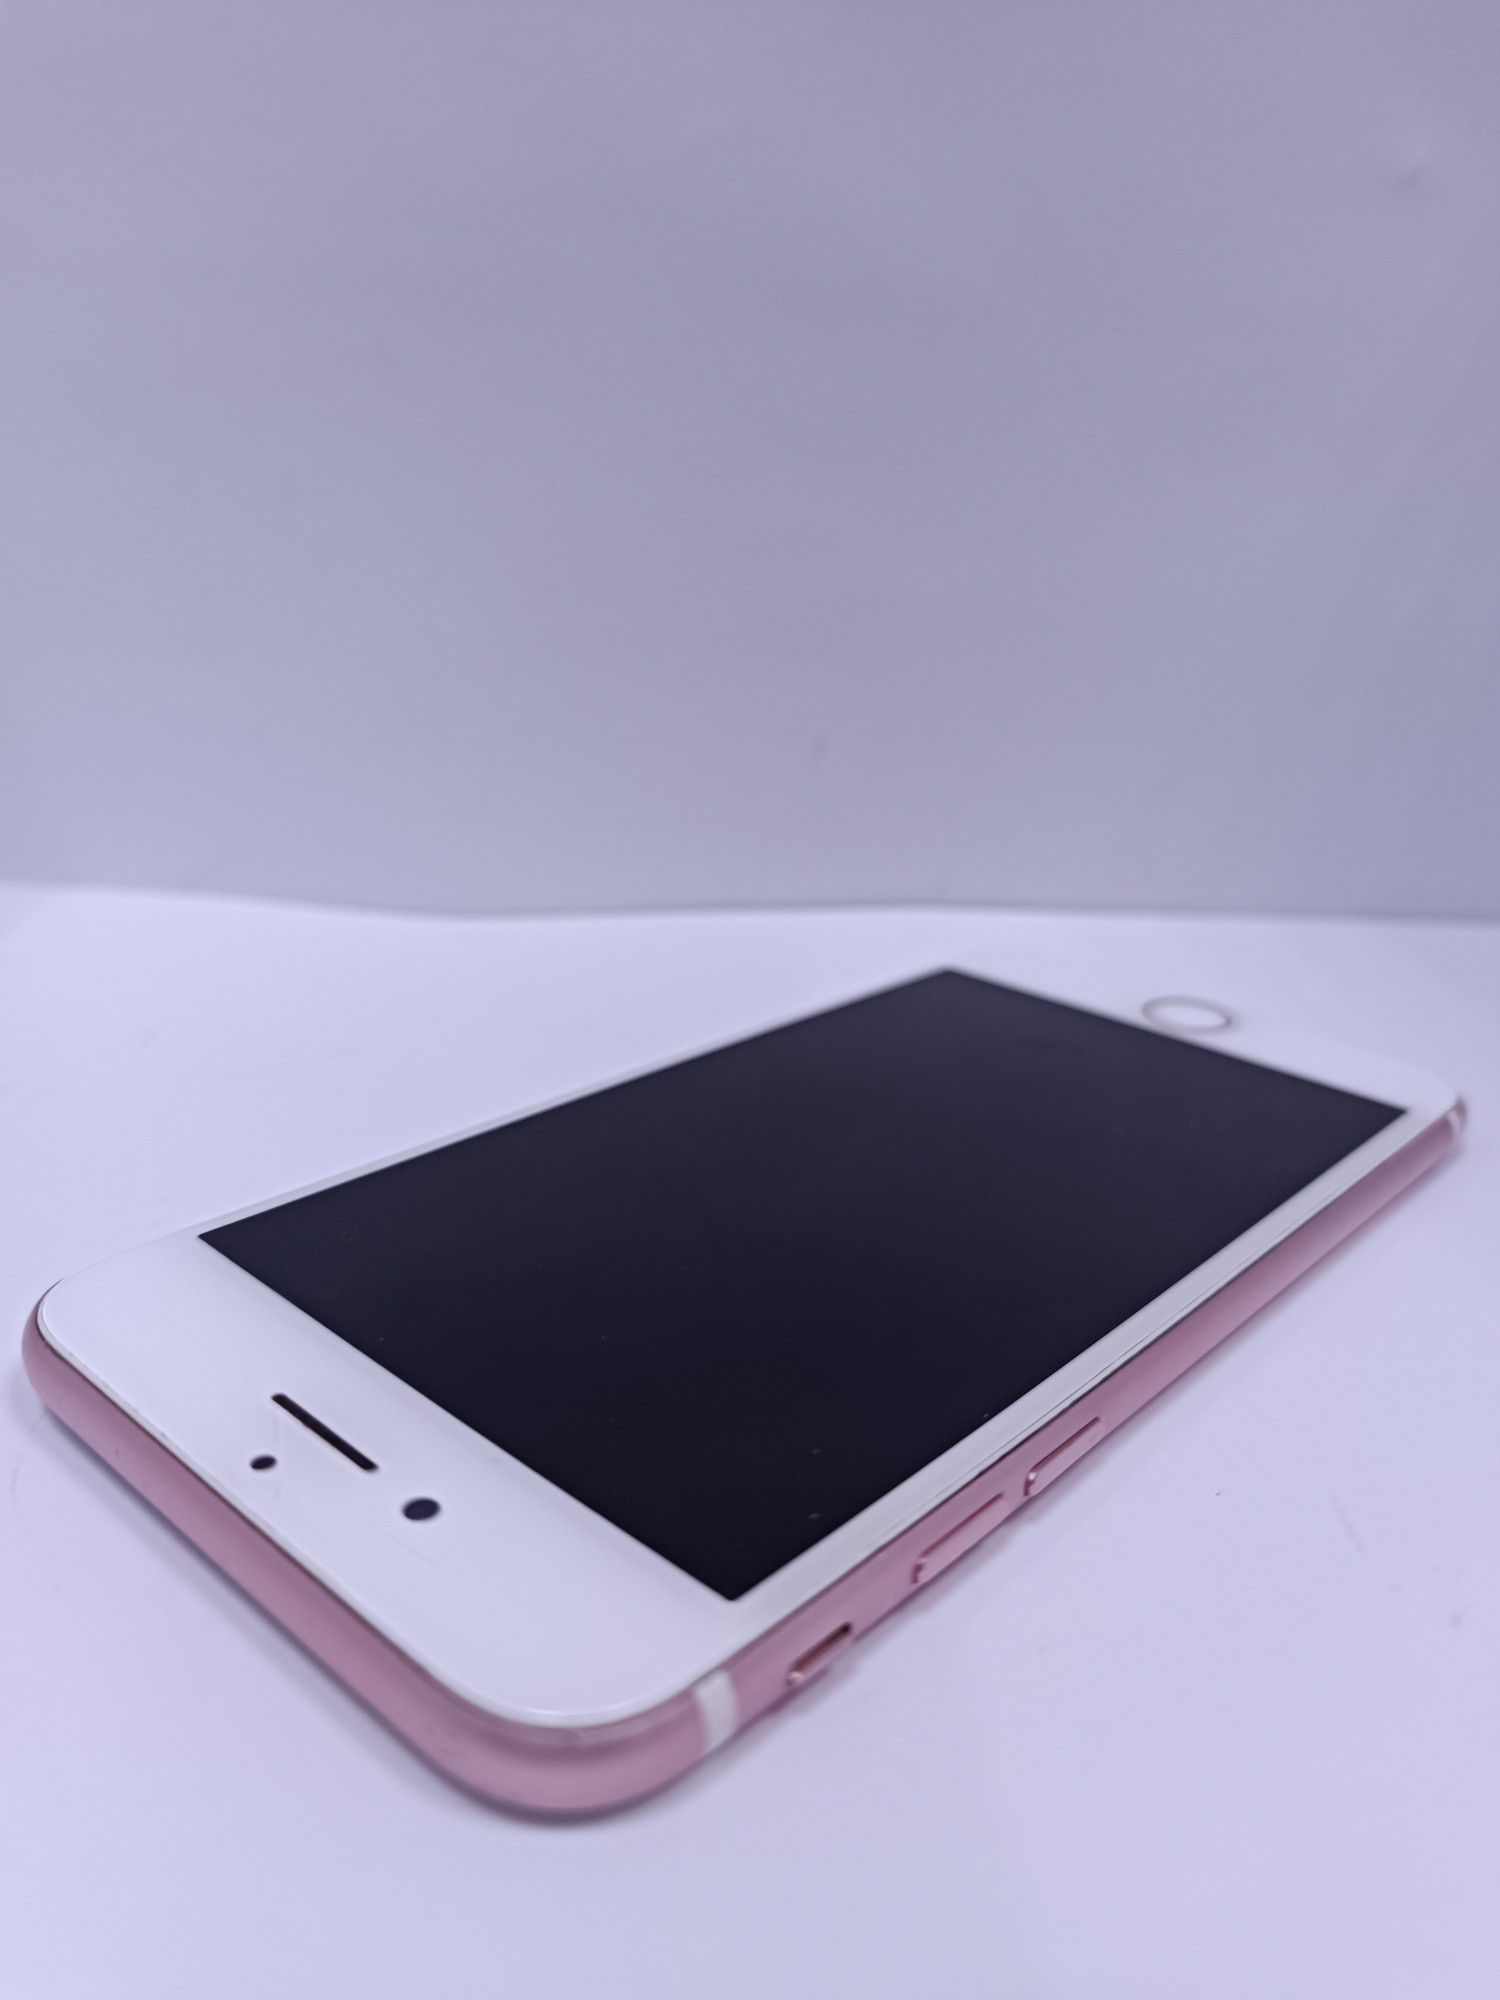 Apple iPhone 7 32Gb Rose Gold (MN912) 4